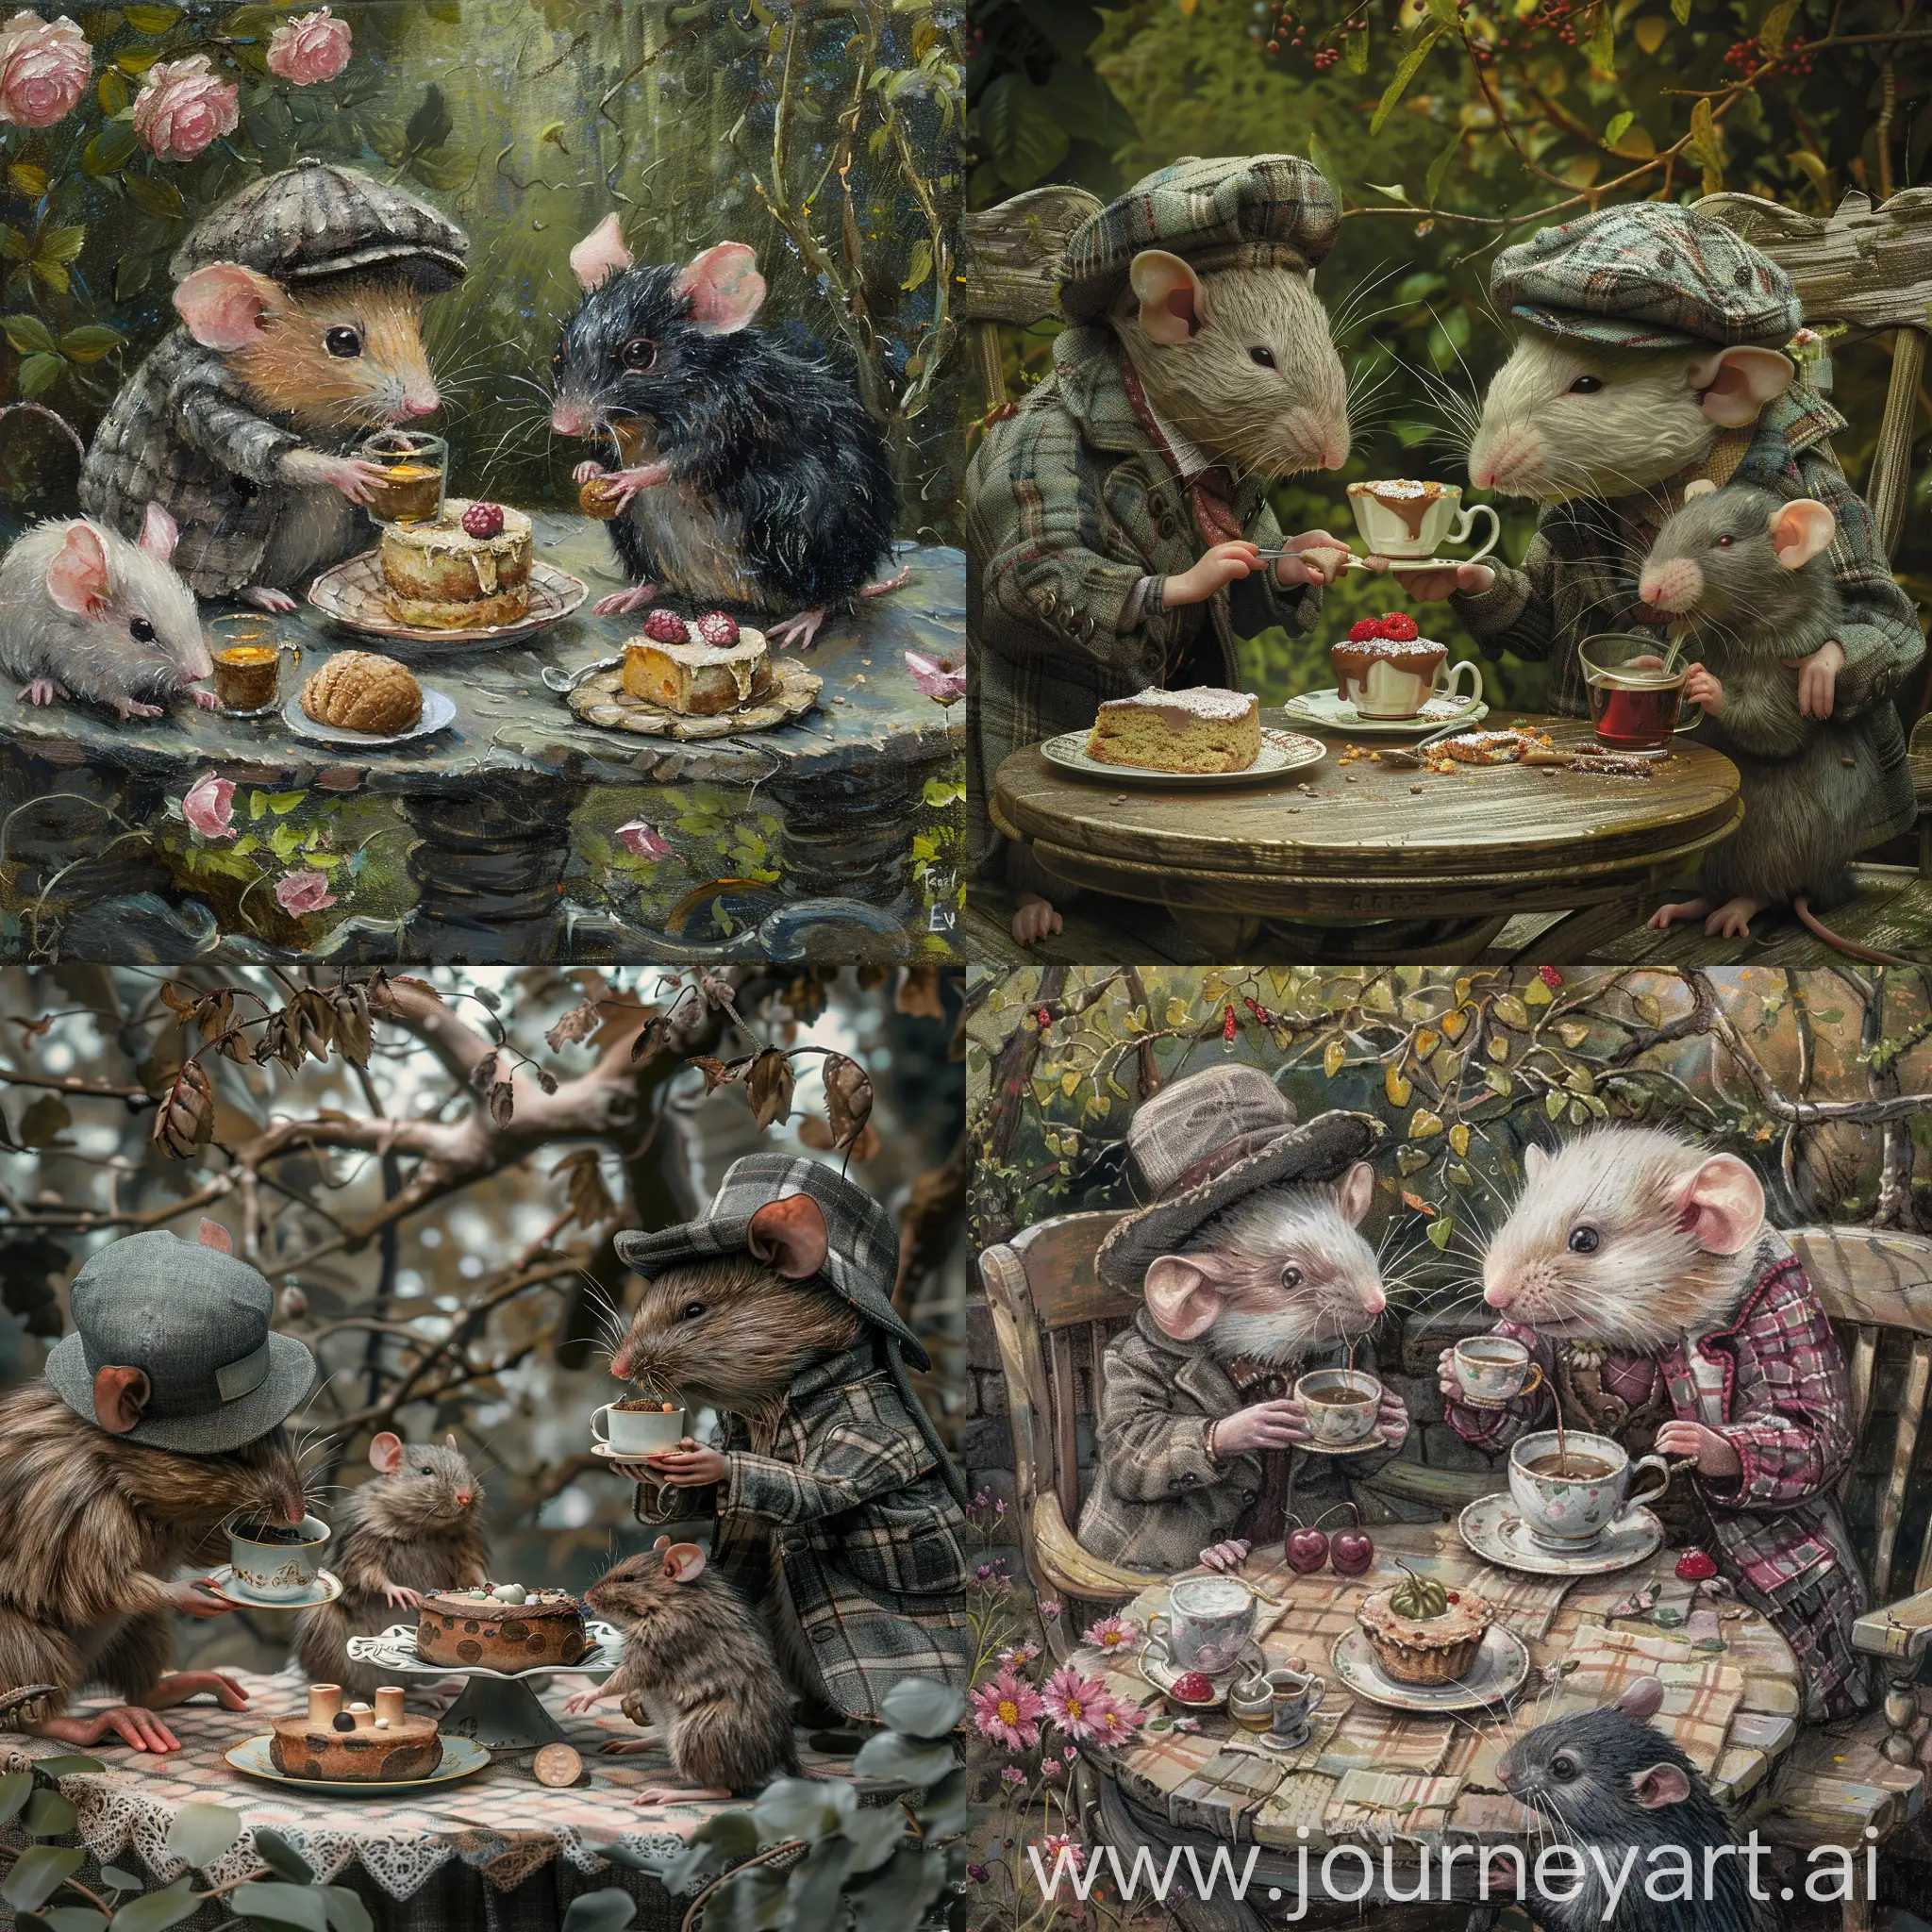 Animals-in-Beatrix-Potter-Style-Enjoying-Cocoa-and-Cake-in-Idyllic-Garden